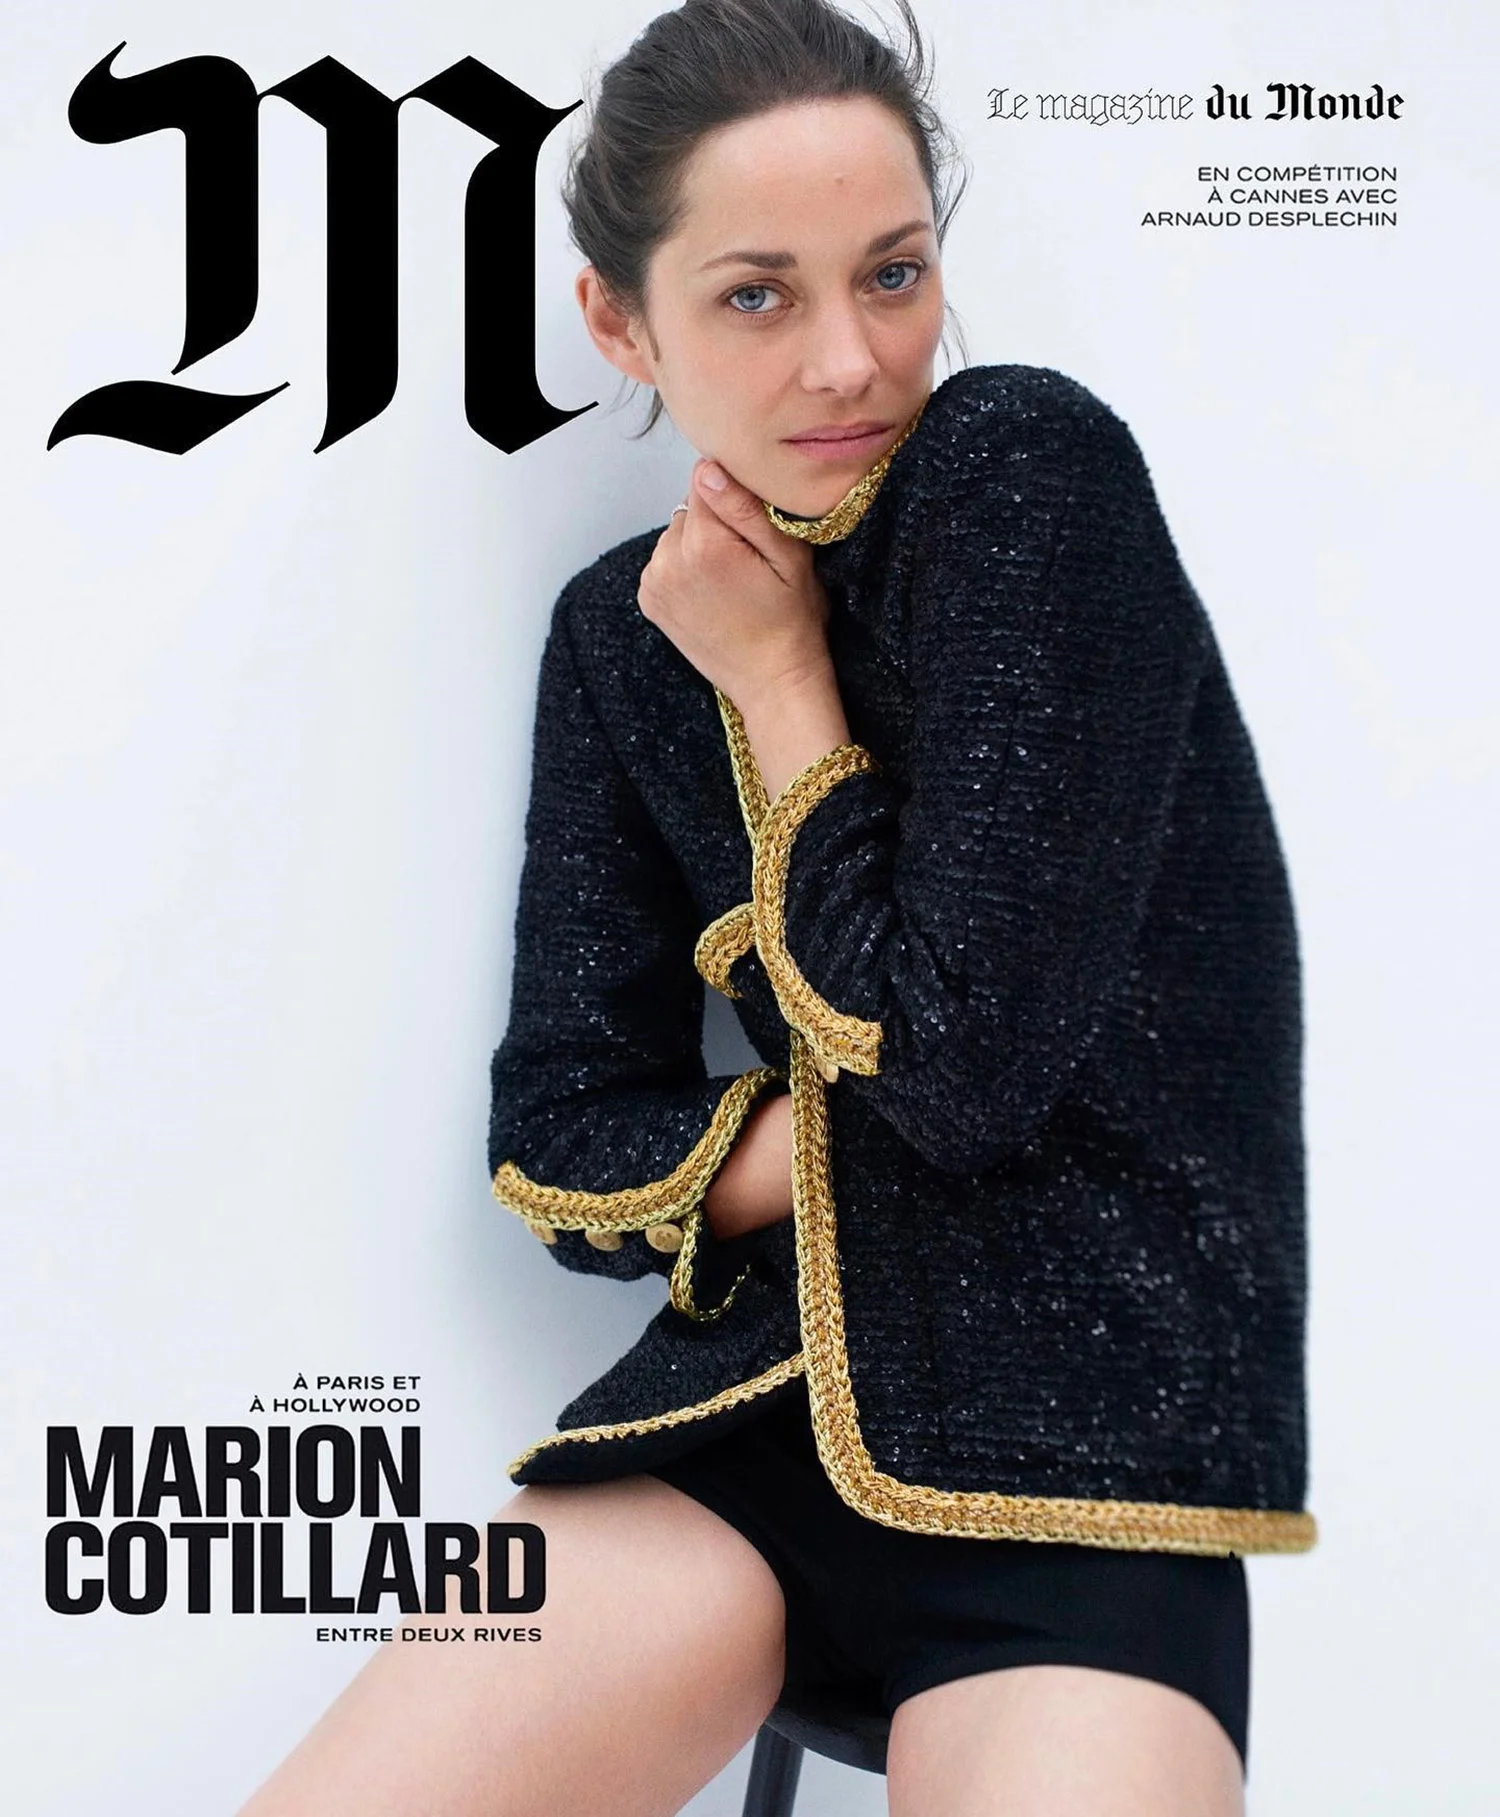 Marion Cotillard covers M Le magazine du Monde May 21st, 2022 by Karim Sadli